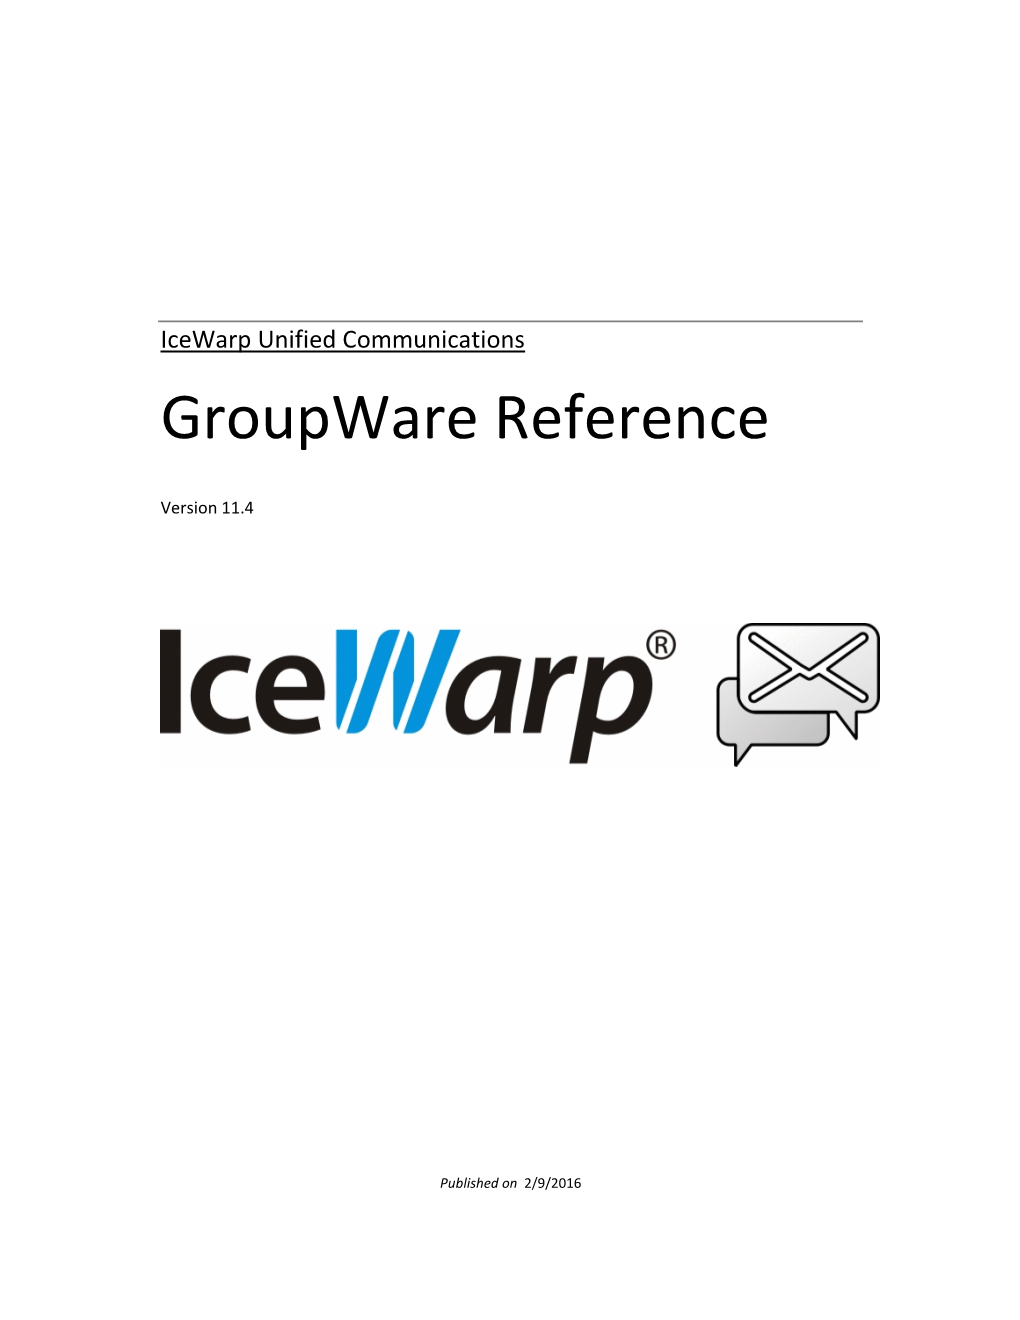 Groupware Reference